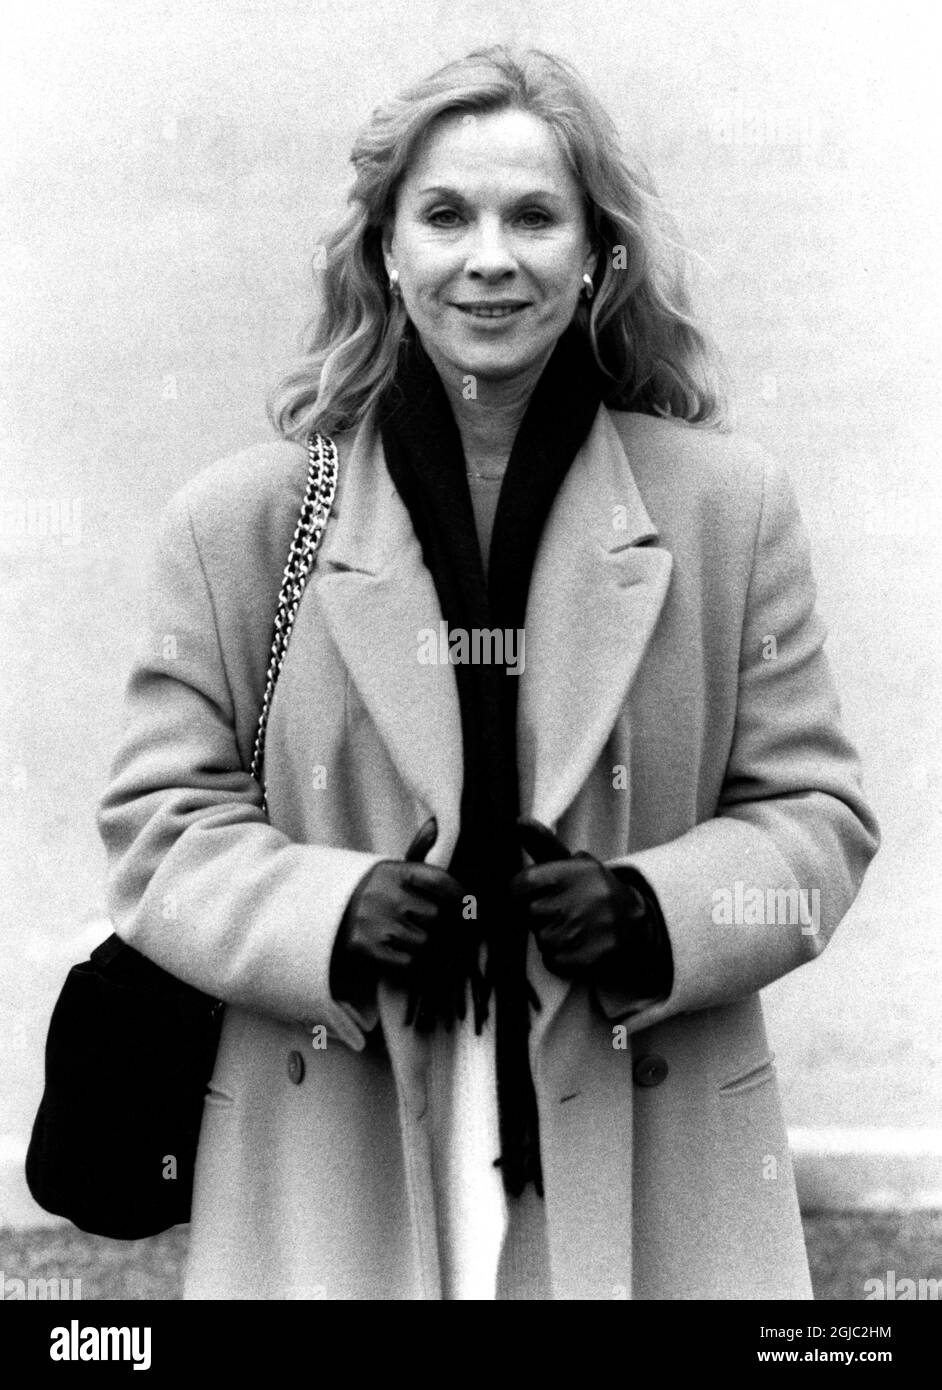 ARKIV 19910305. Bibi Andersson, Actress Foto: Leif R Jansson / SvD / SCANPIX / Kod: 11014  Stock Photo